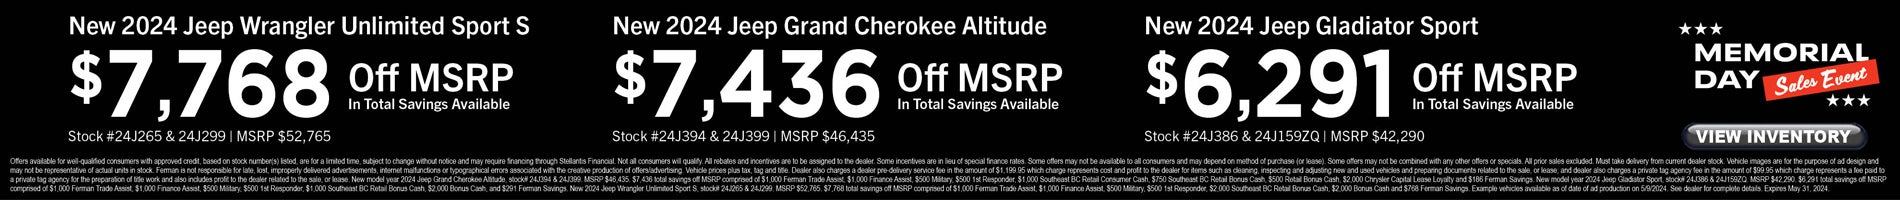 May Savings on New Jeep Gladiator, Wrangler & Grand Cherokee